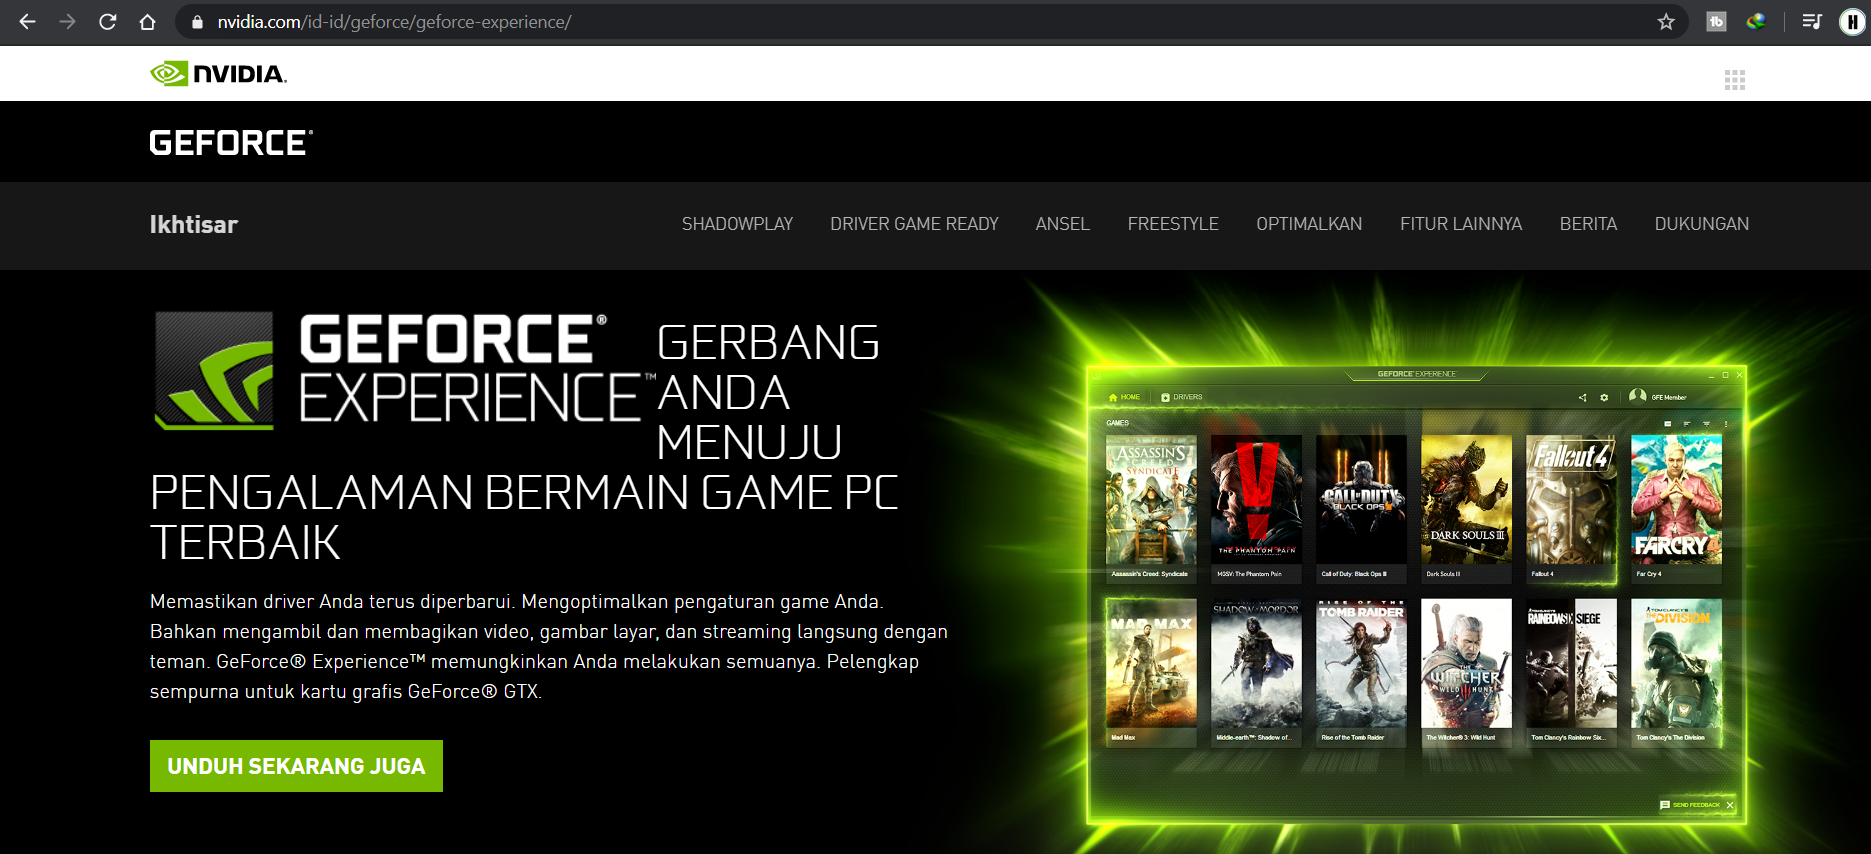 Nvidia geforce experience игры. GEFORCE experience (джифорс экспириенс). GEFORCE experience в игре. NVIDIA приложение. Приложение NVIDIA GEFORCE experience.